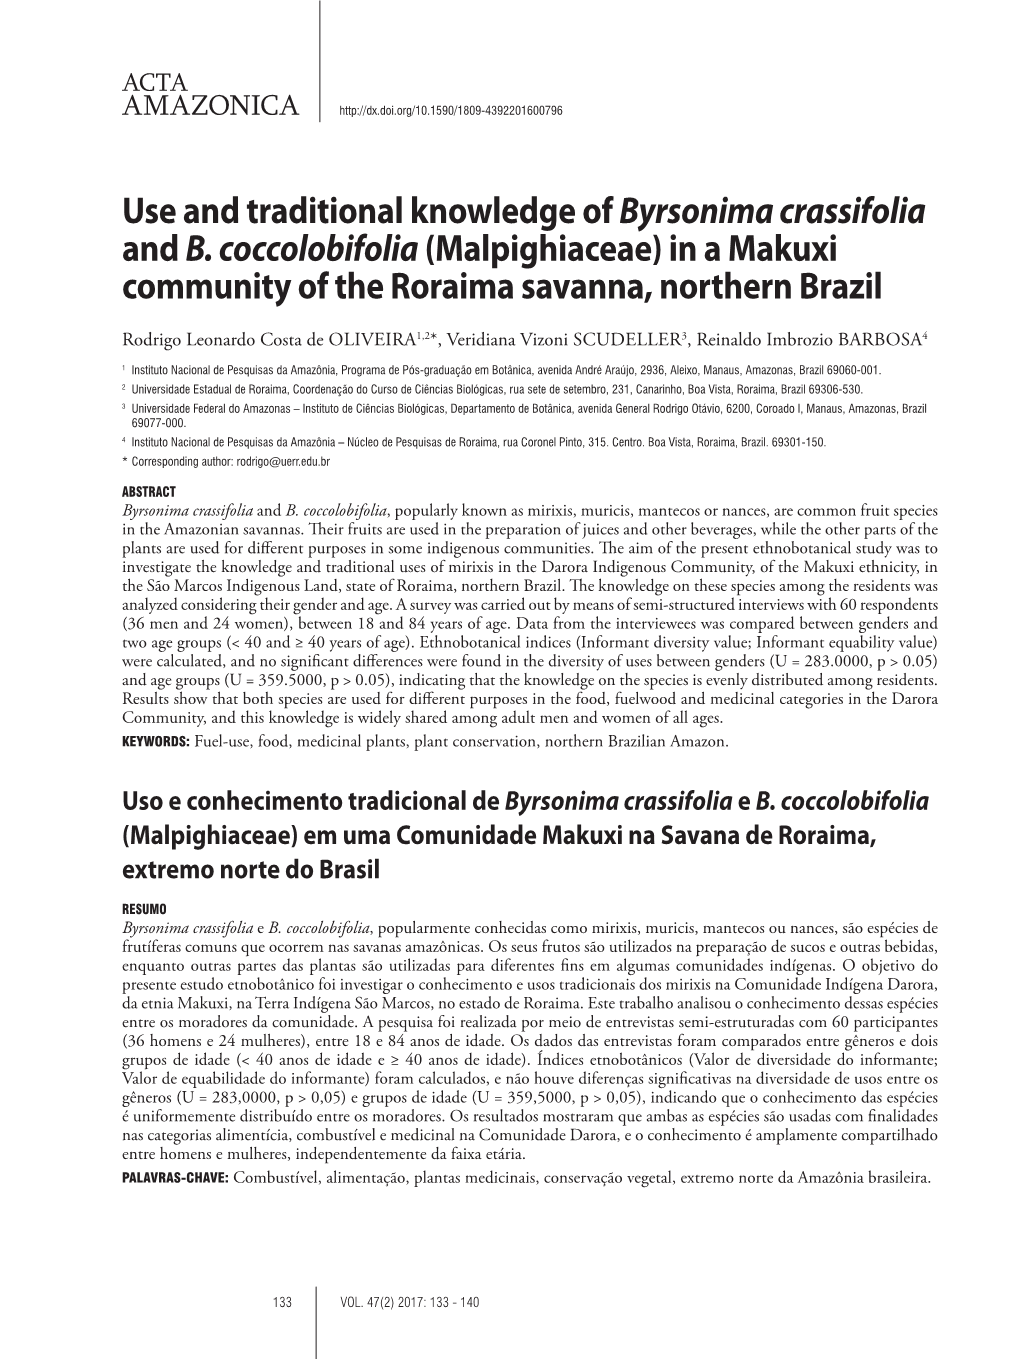 Use and Traditional Knowledge of Byrsonima Crassifolia and B. Coccolobifolia(Malpighiaceae)